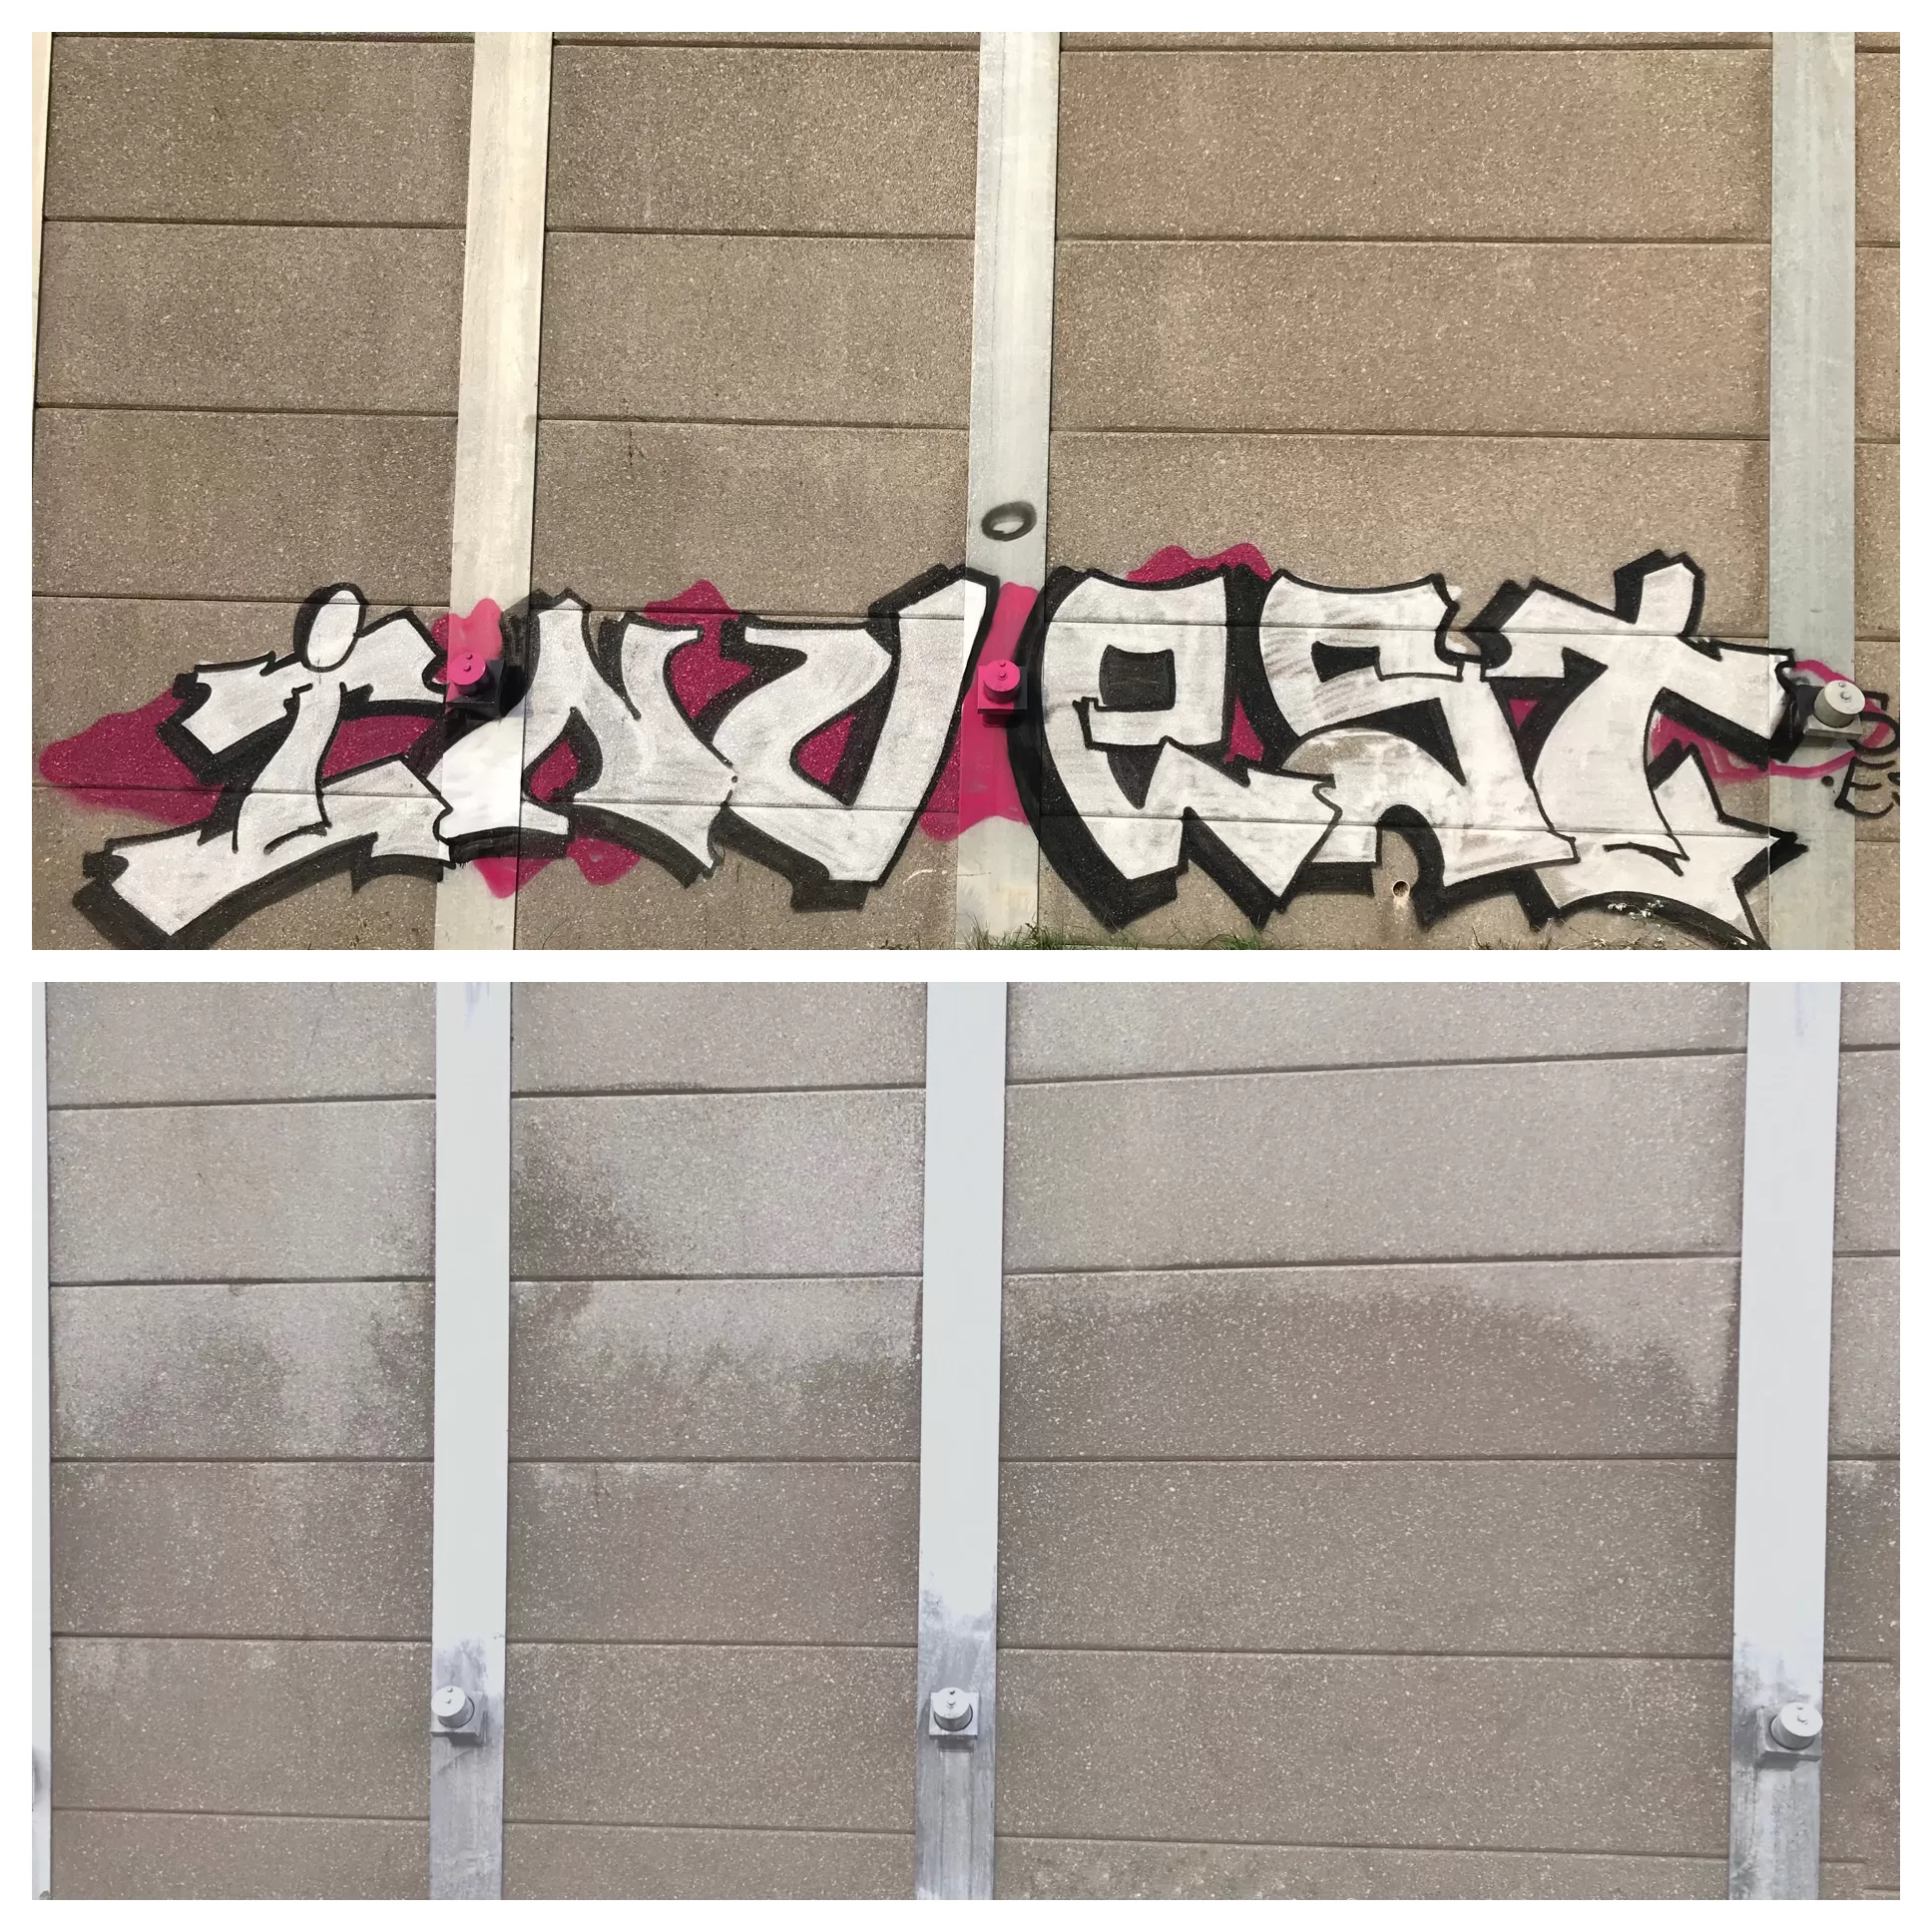 Graffiti Removal in Lexington, KY